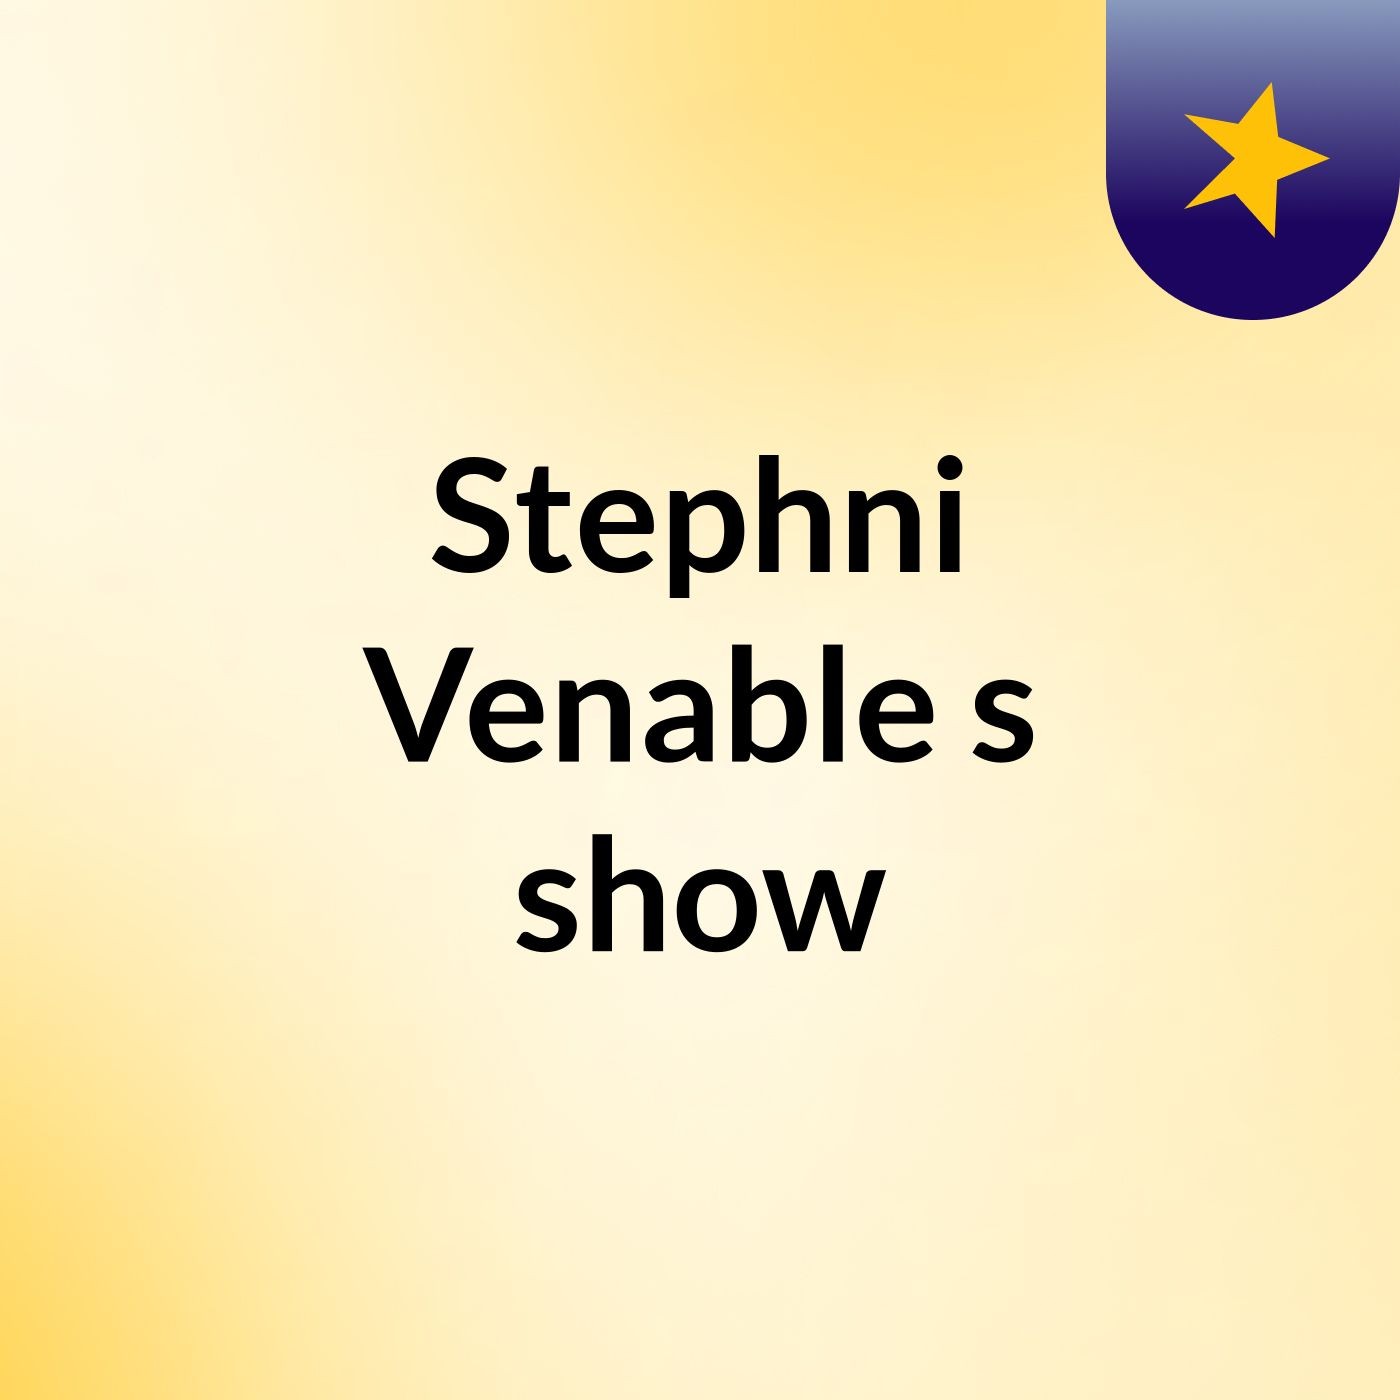 Episode 3 - Stephni Venable's show